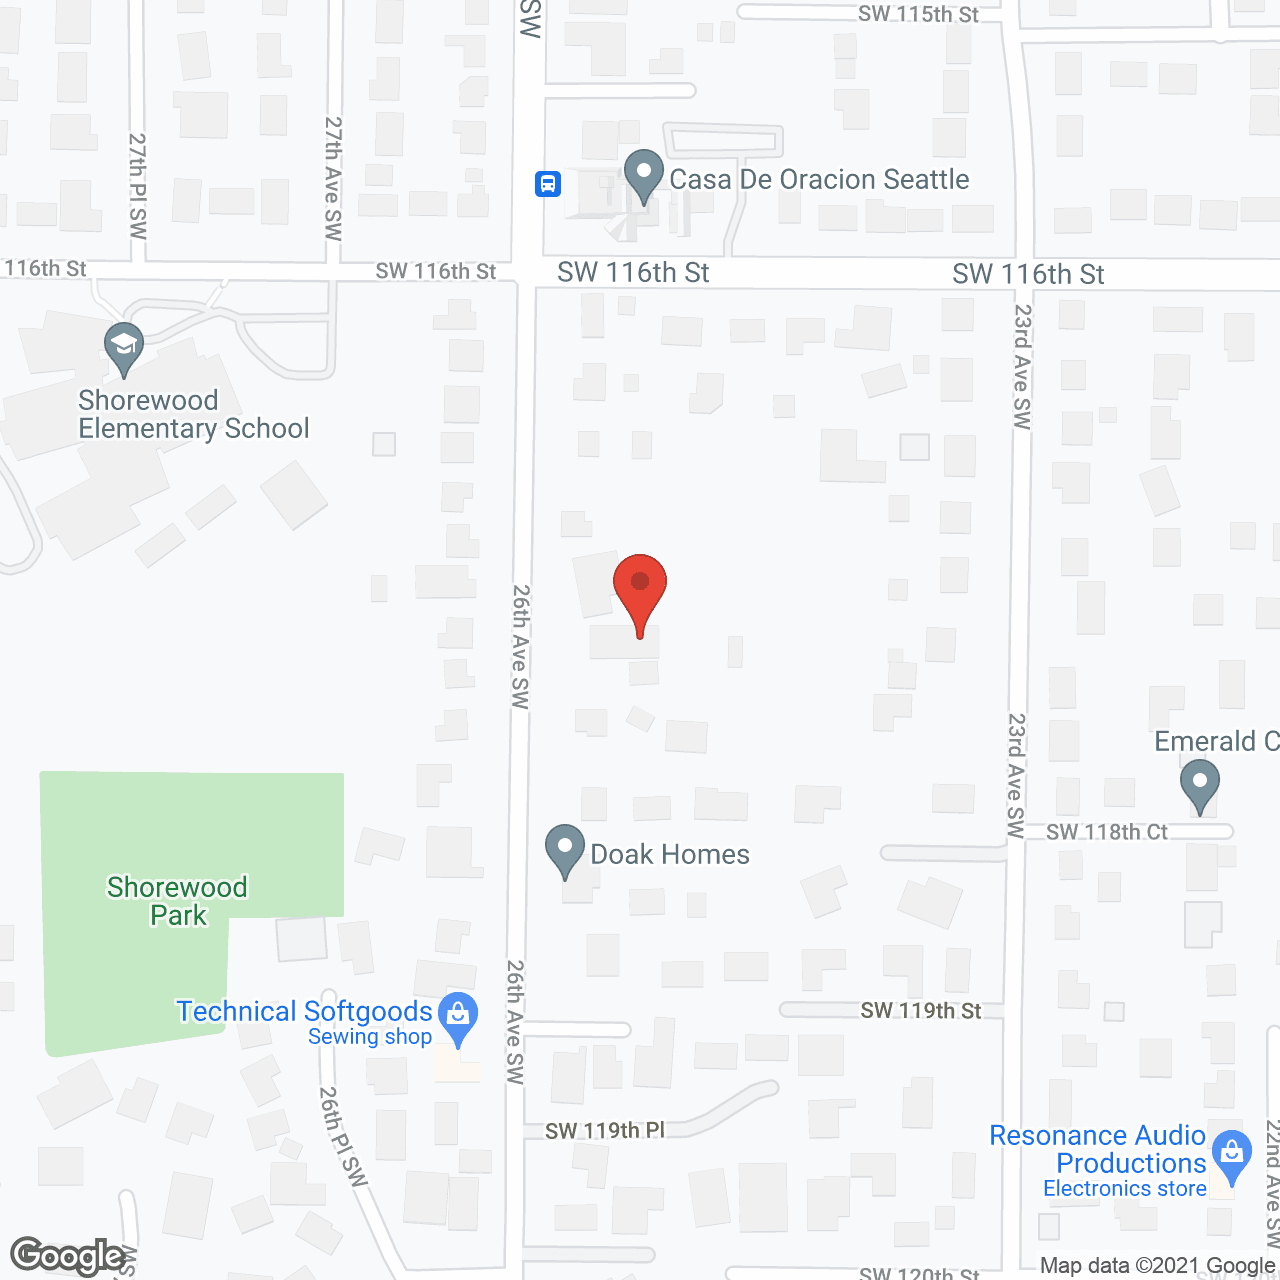 Clark Residence in google map